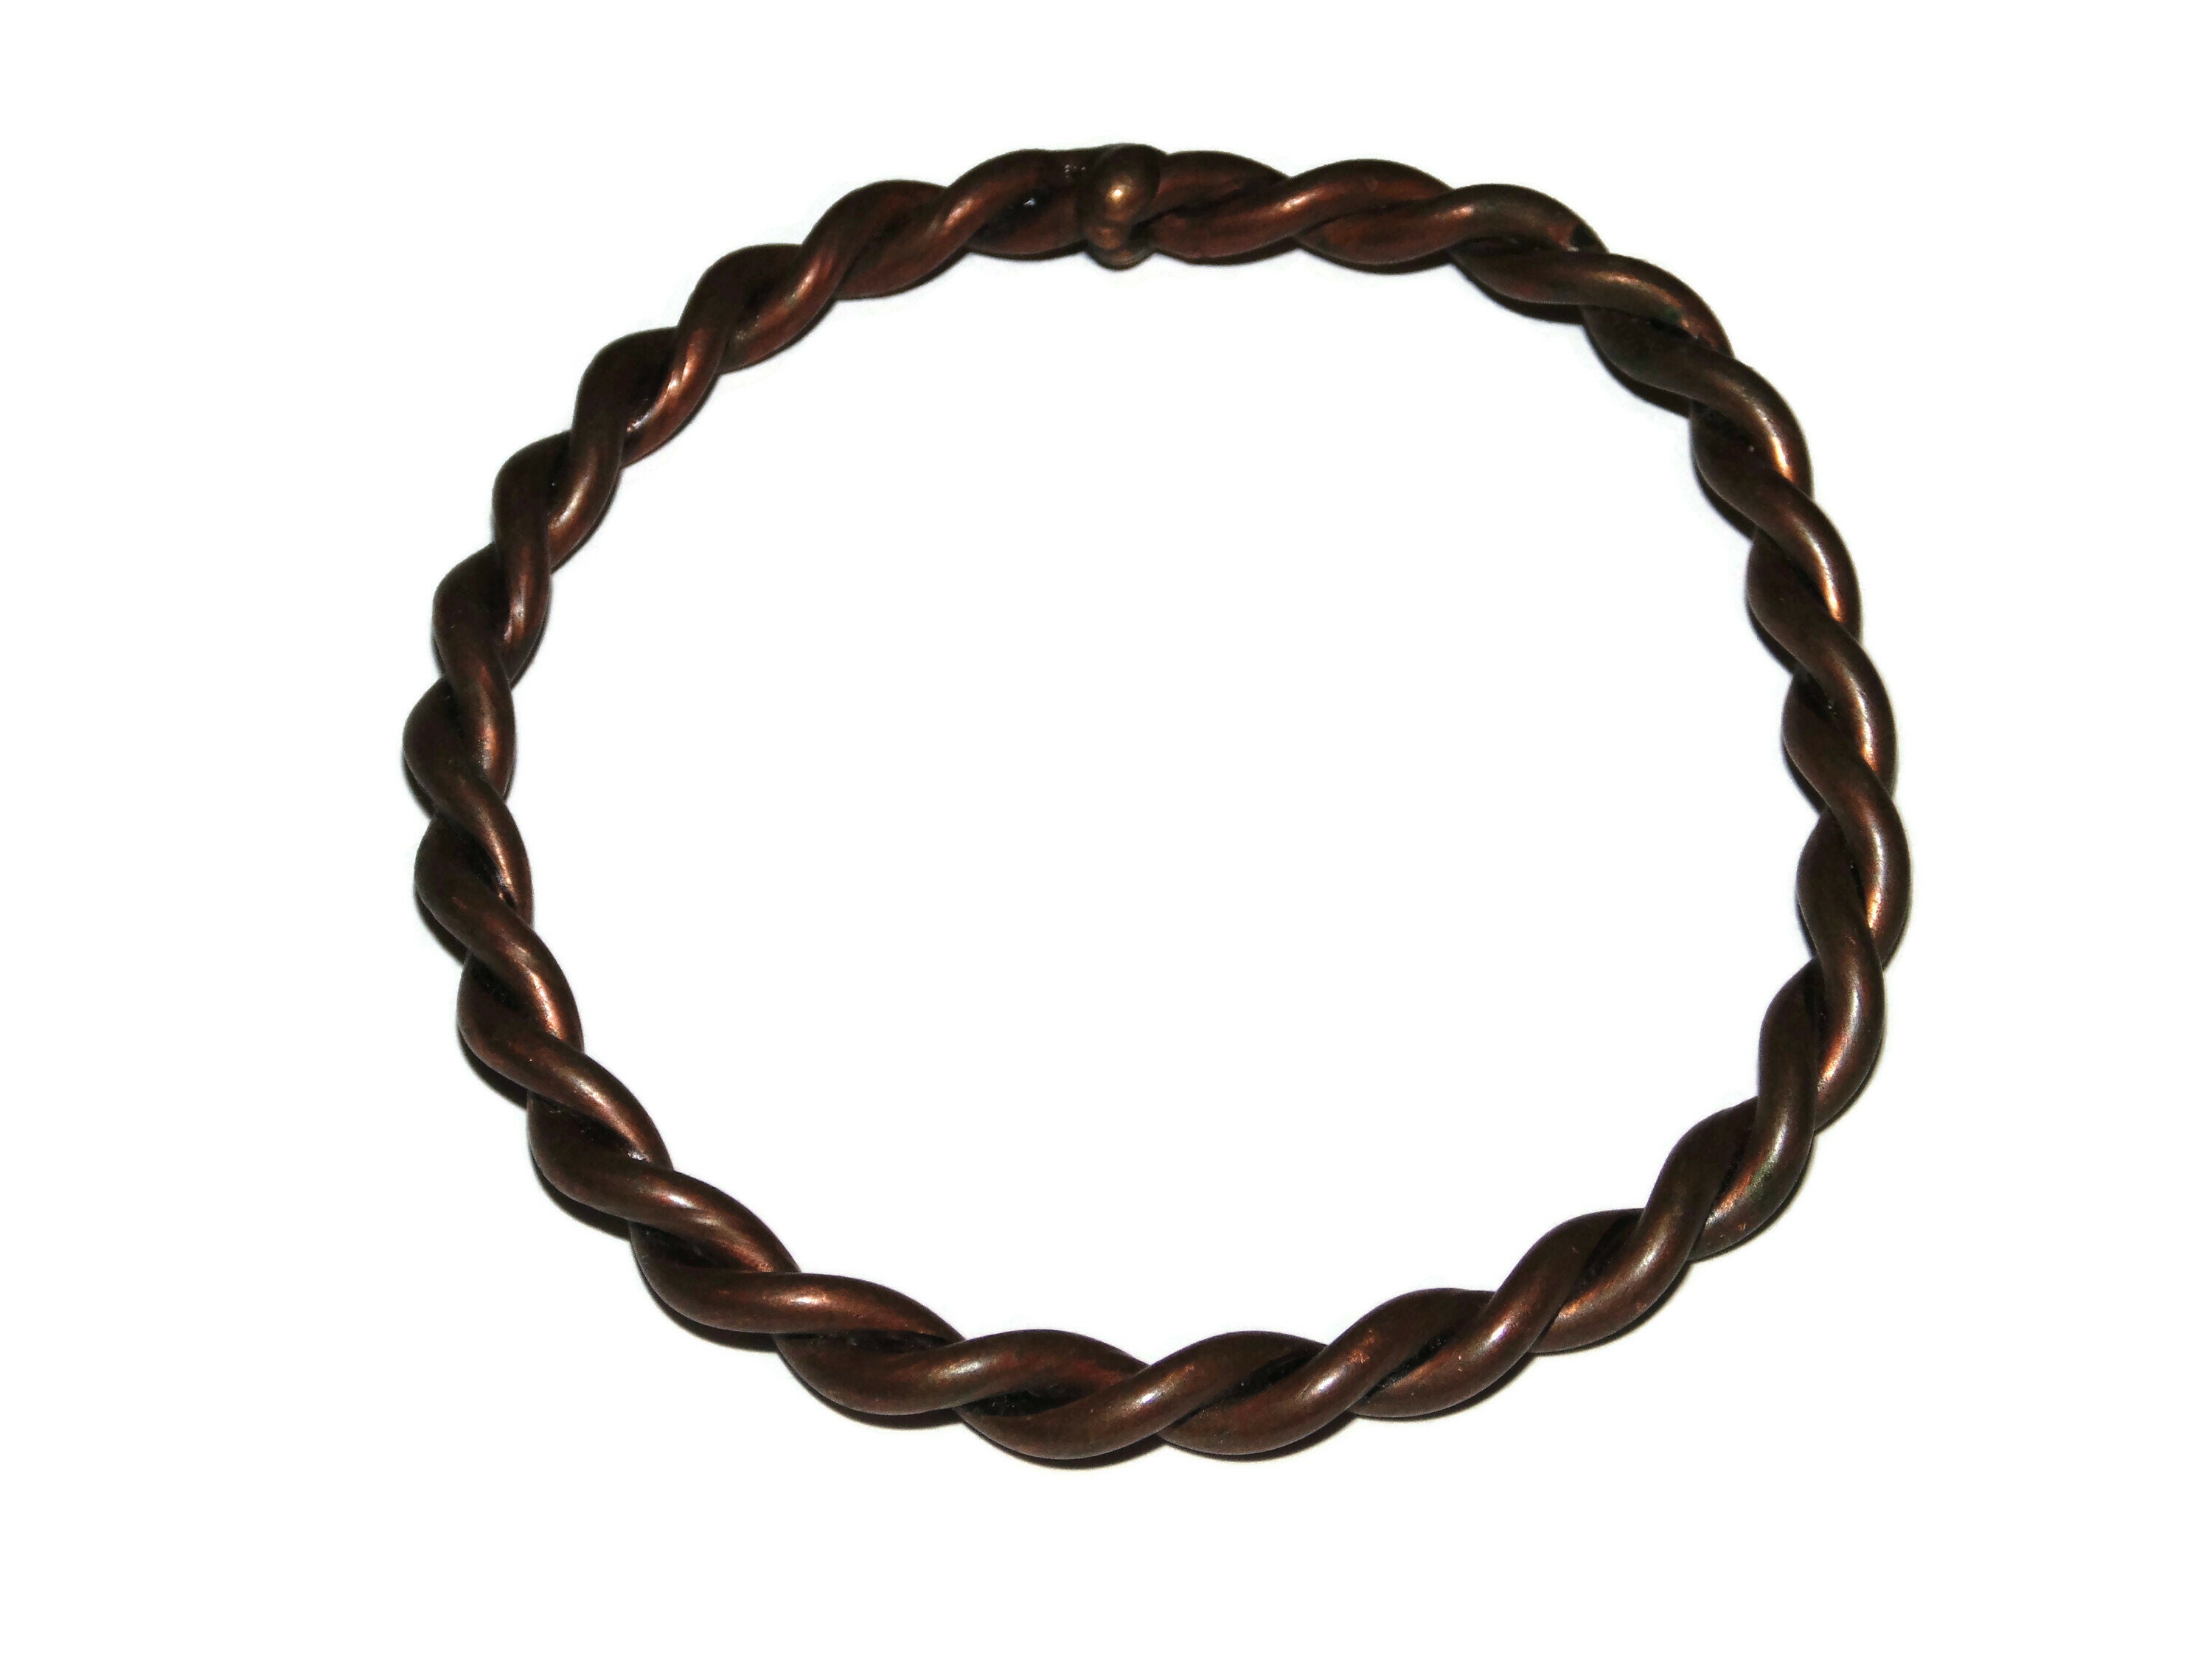 2 older solid copper bracelets - jewelry - by owner - sale - craigslist